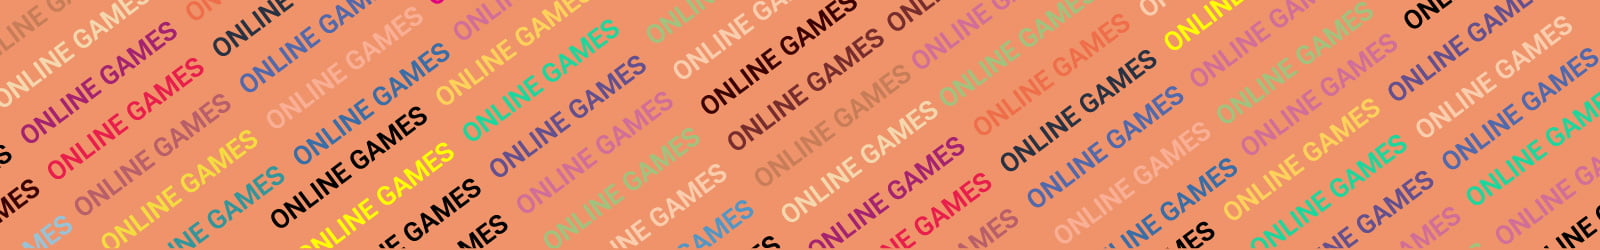 Online ESL Games Orange Banner